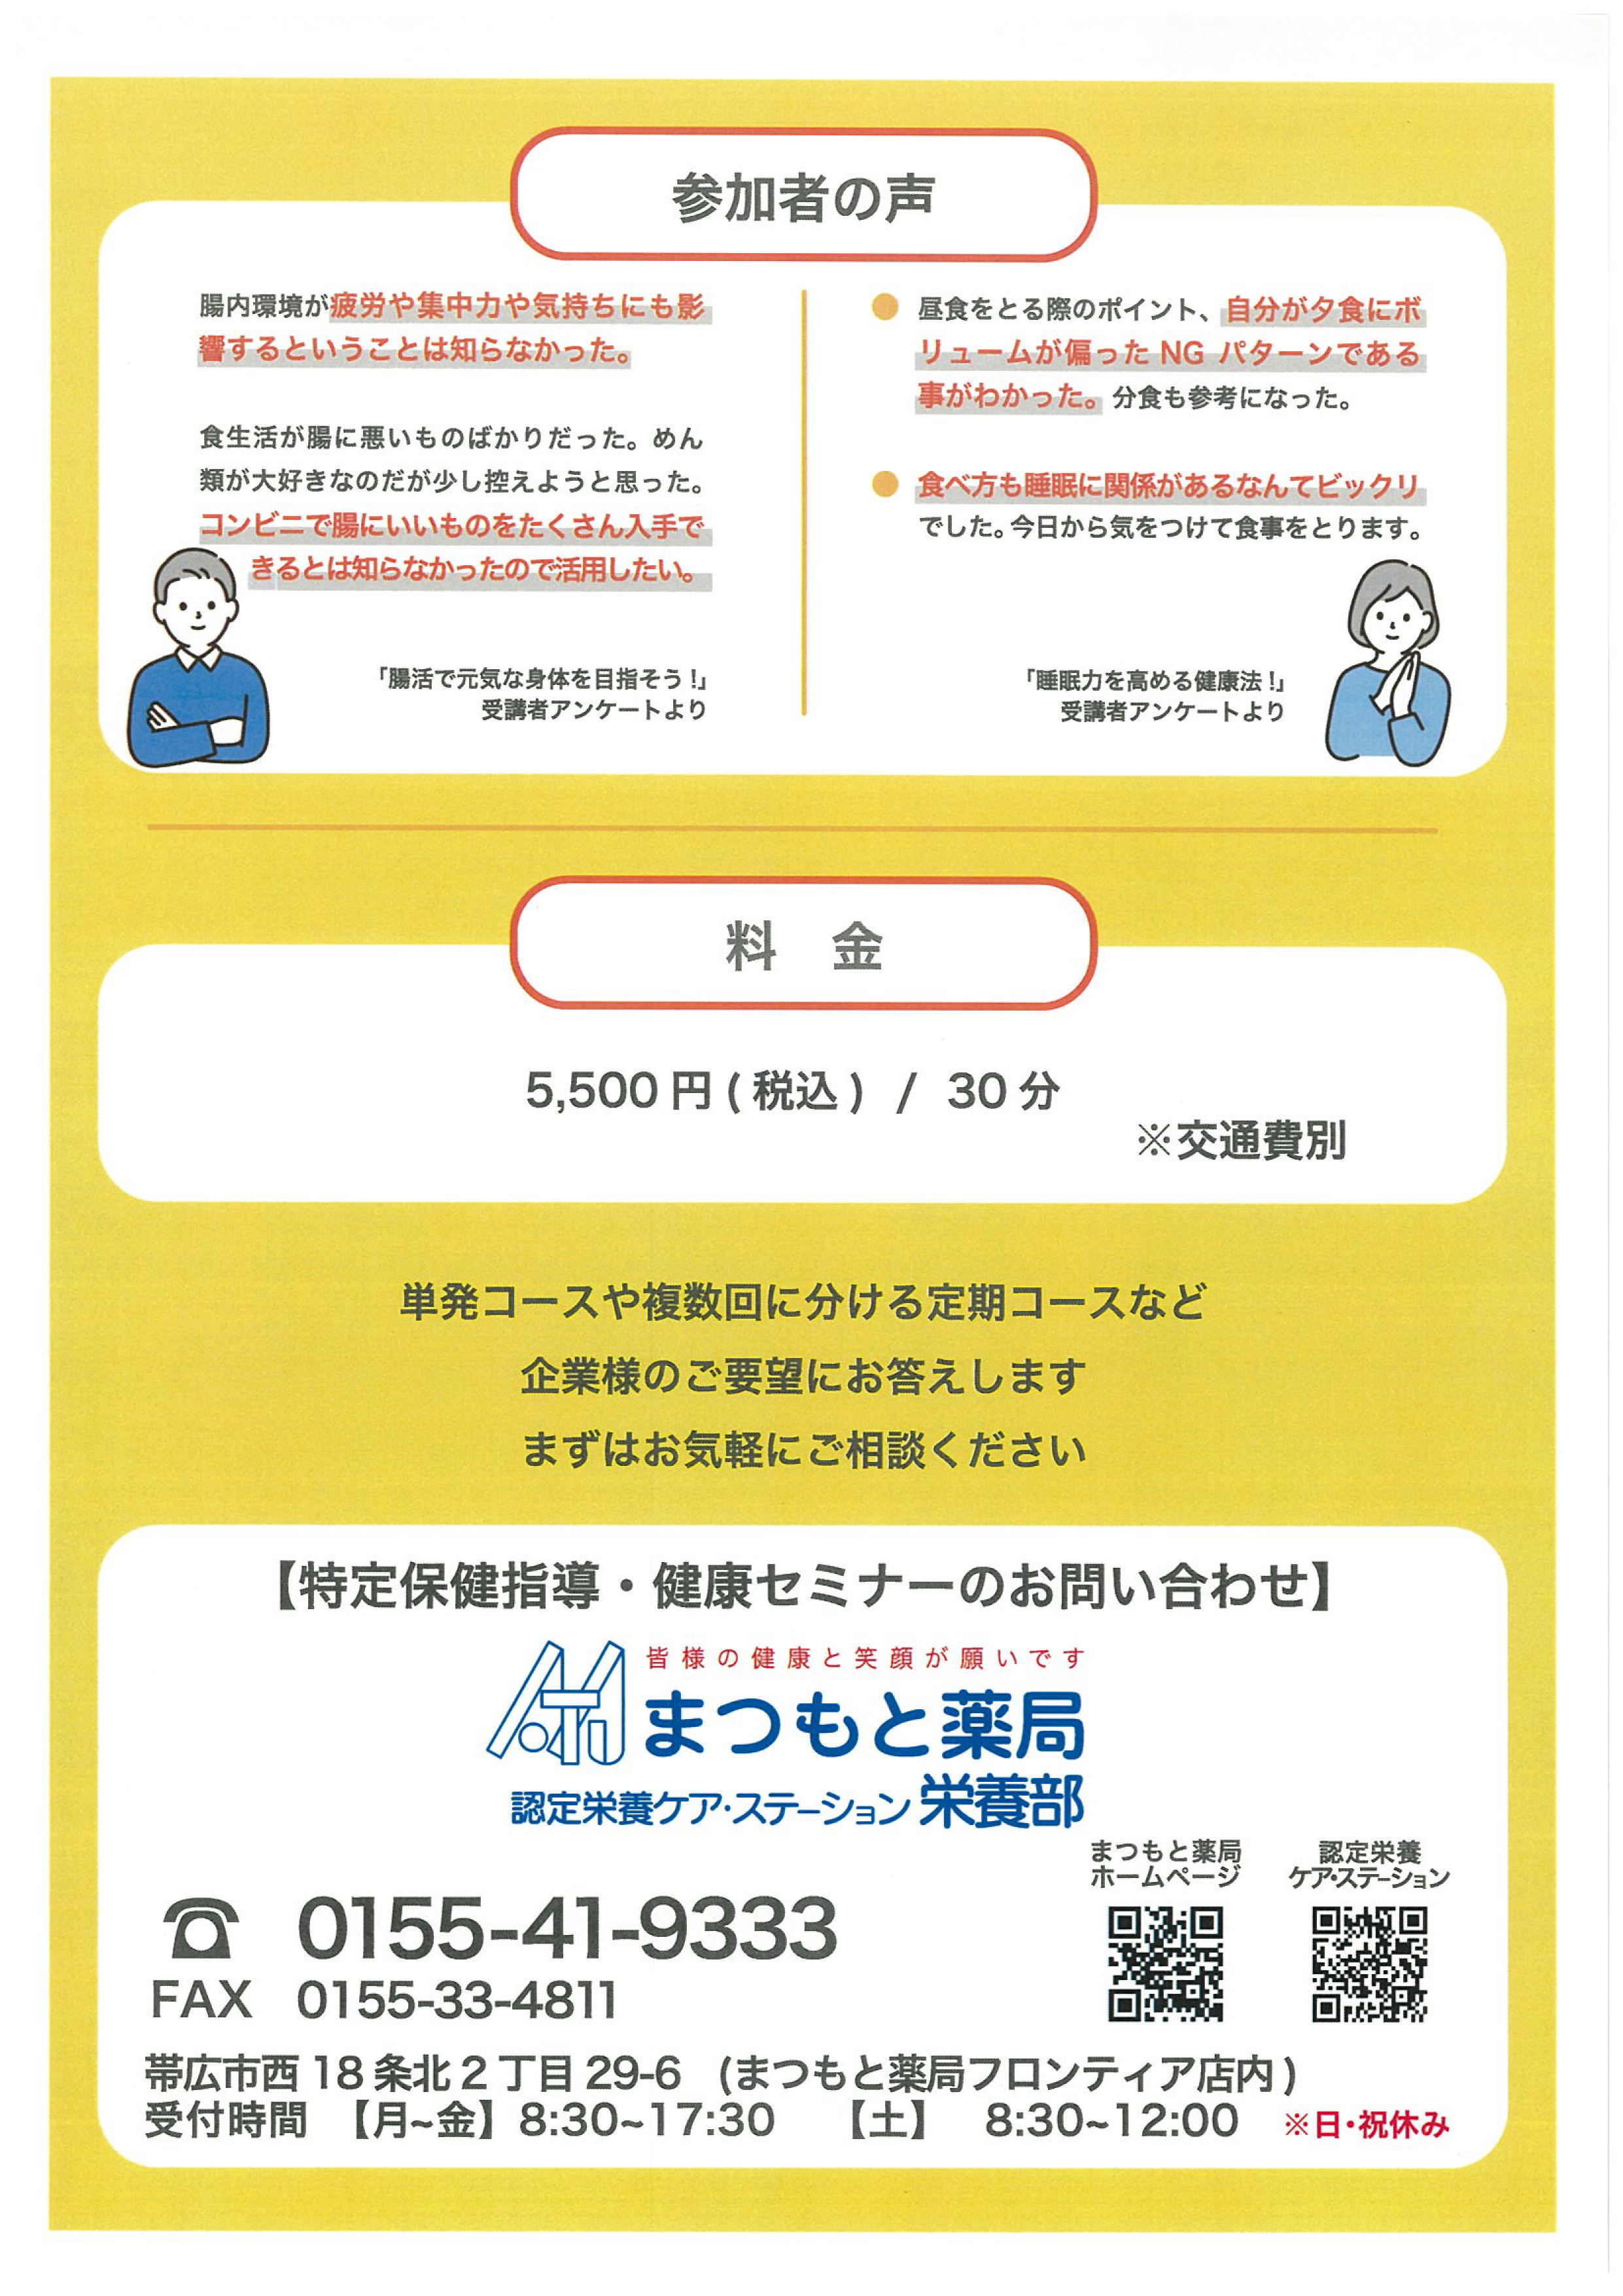 https://www.matumoto.info/information/images/b6a4d4988979279332a4ba8a33ab1a3ded4f2529.jpg